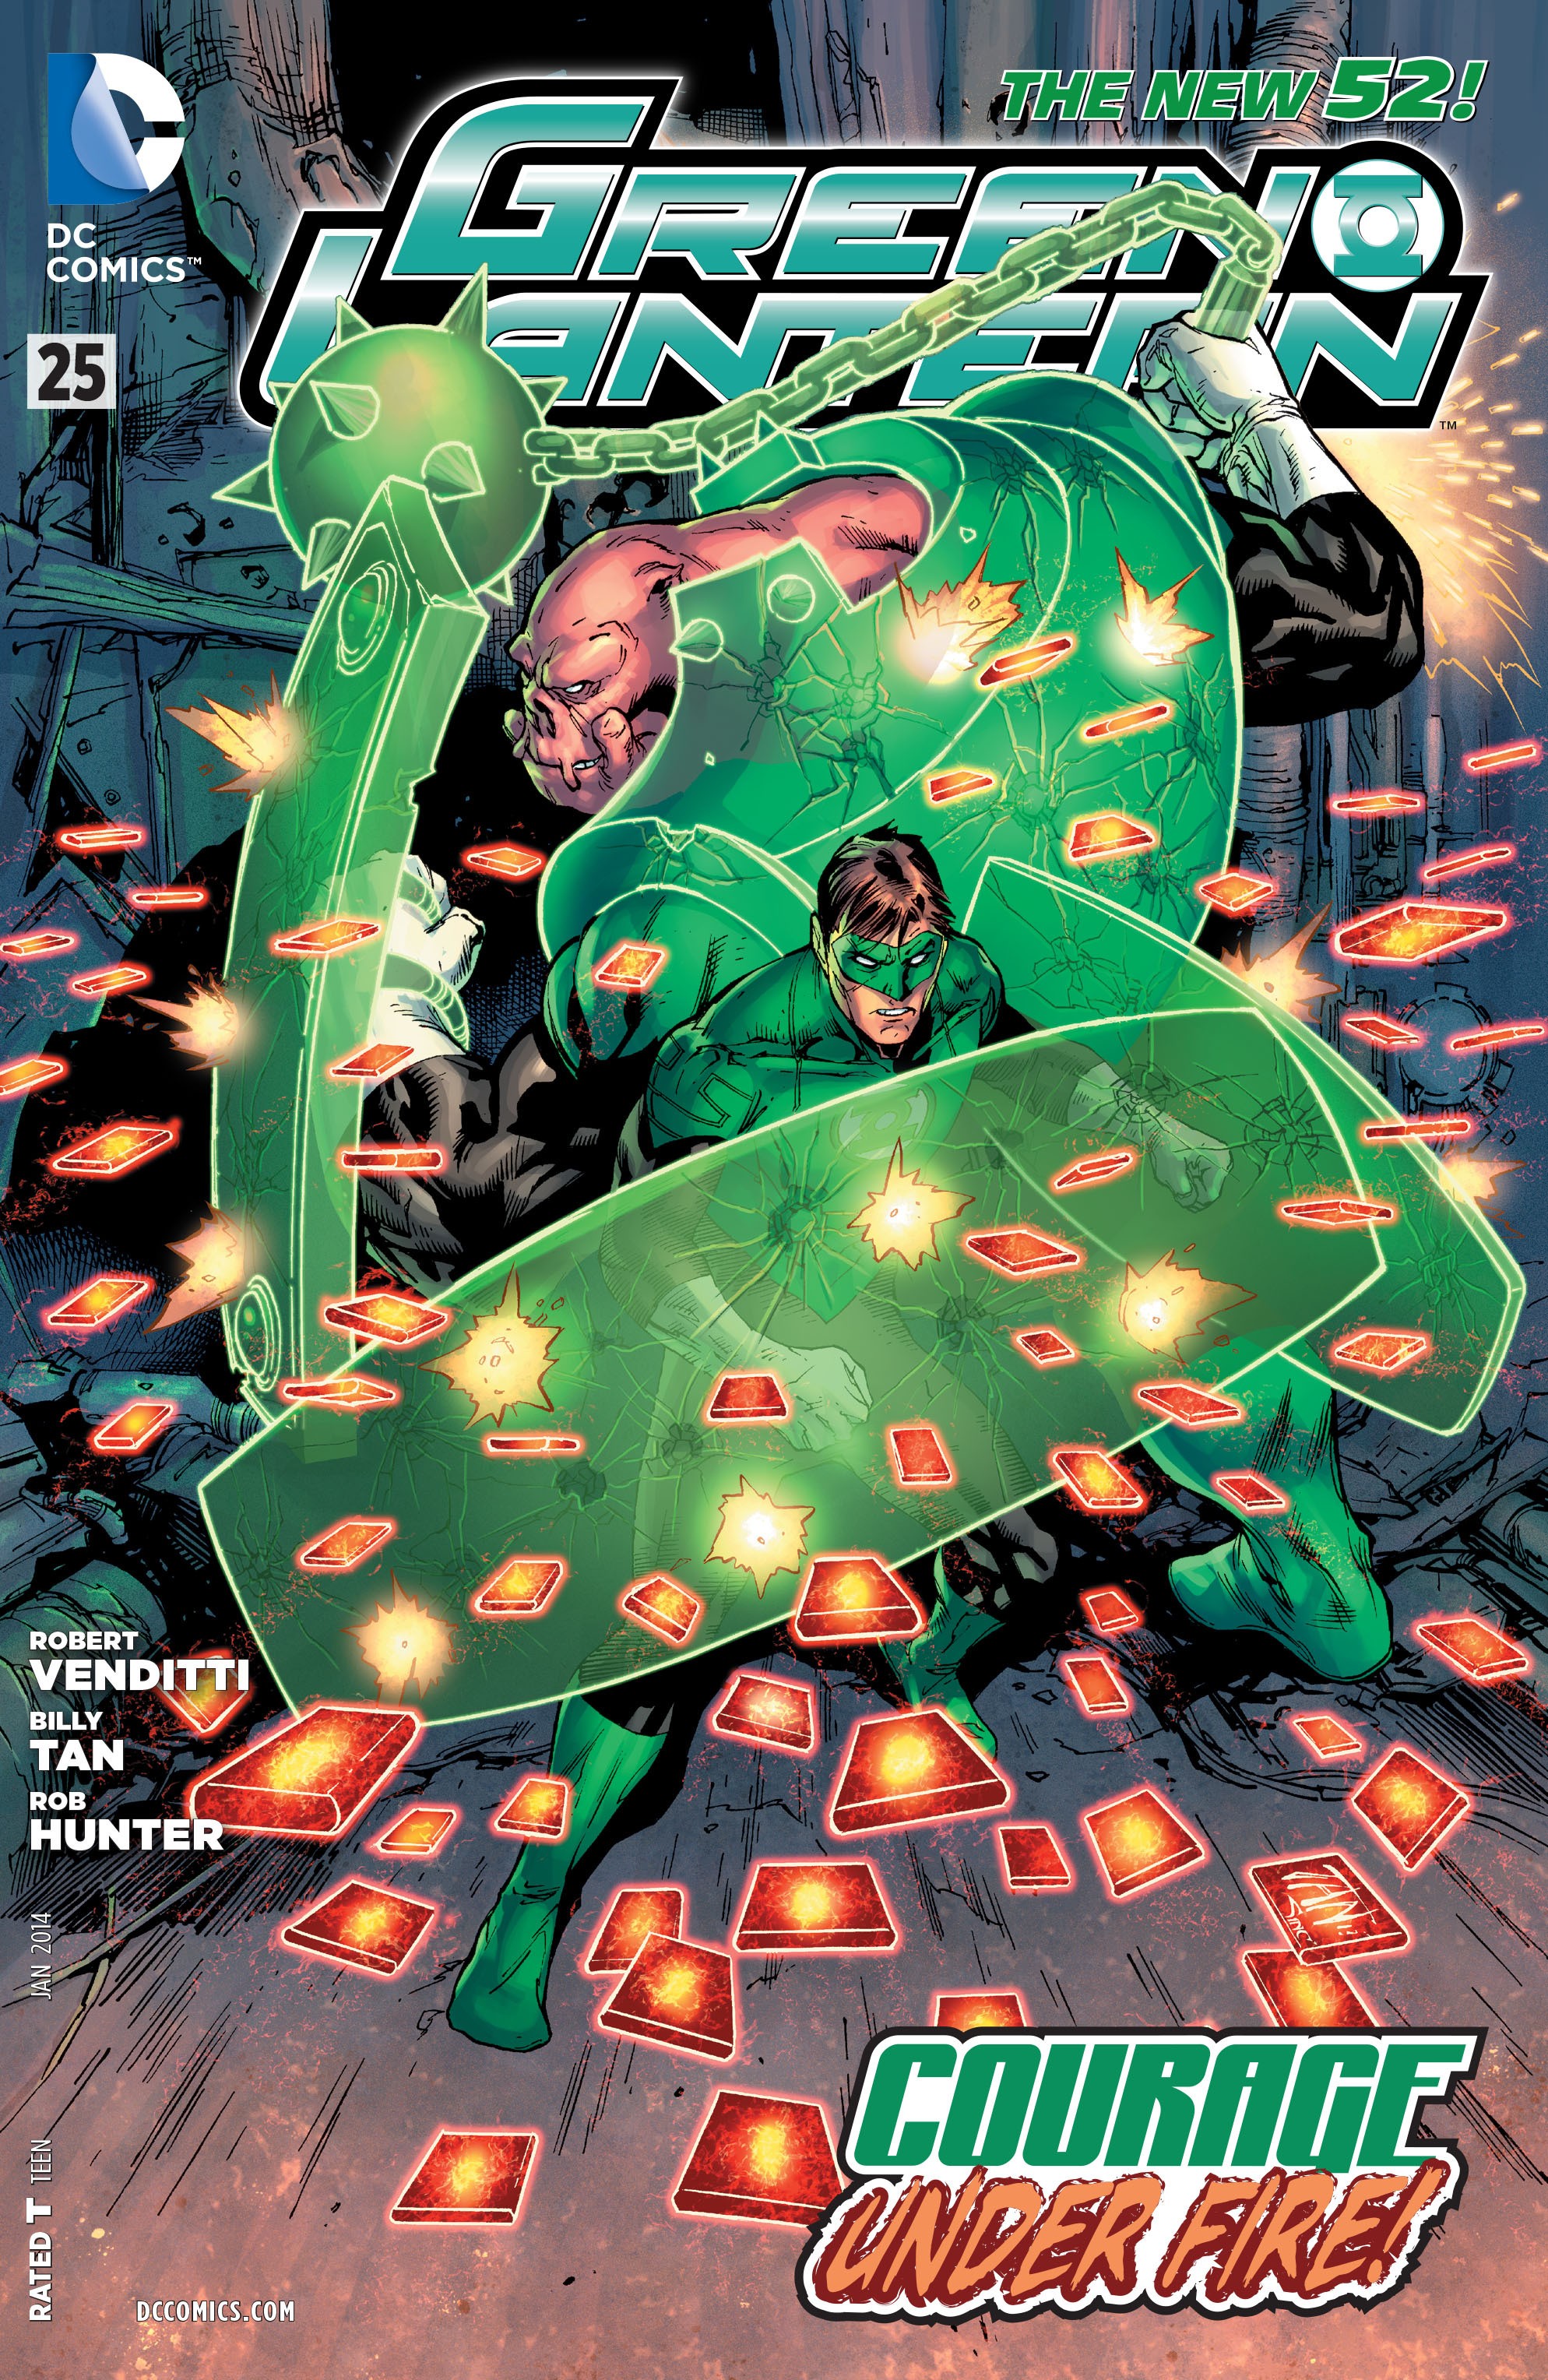 Green Lantern Vol. 5 #25